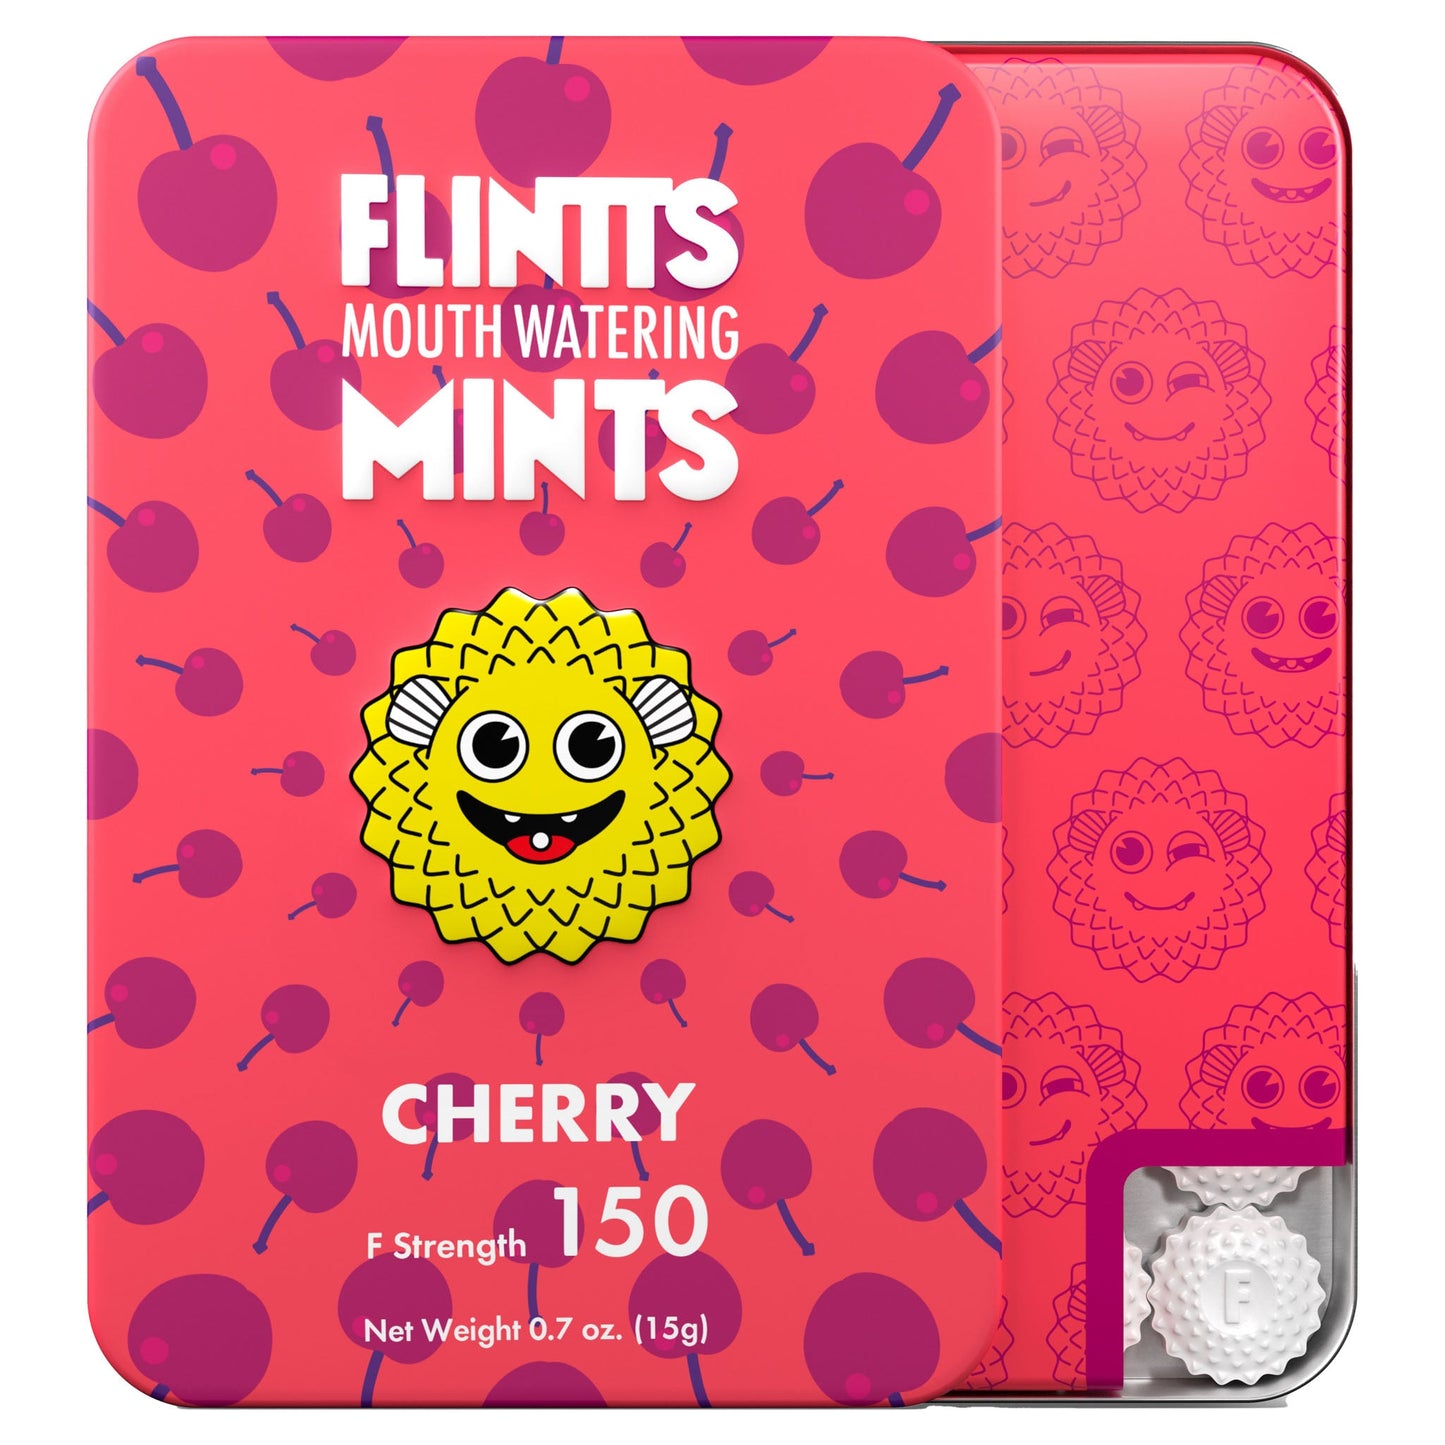 Flintts Mints Cherry F Strength 150 0.7oz